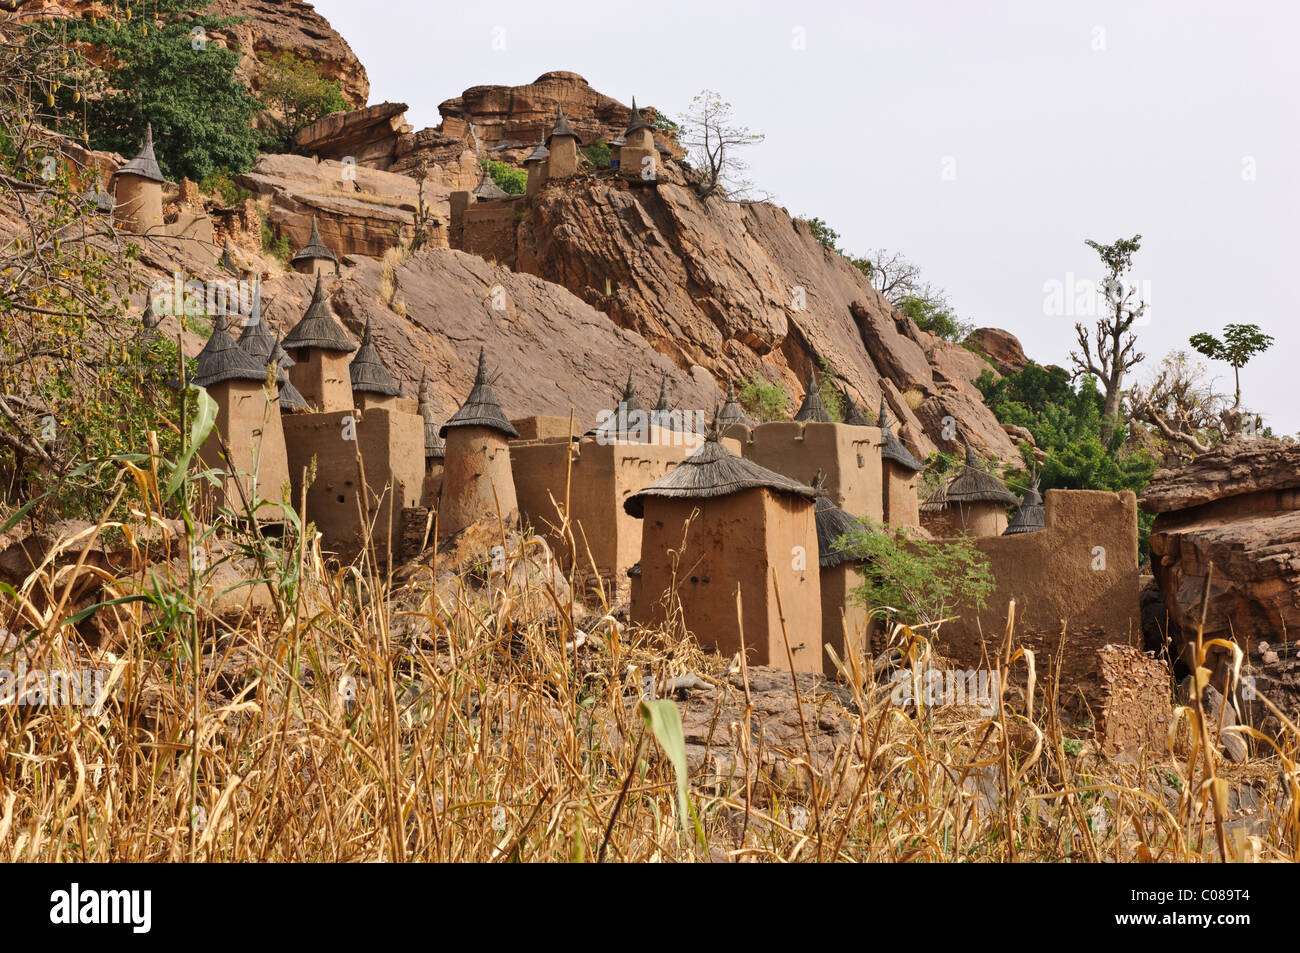 Houses and granaries of the Dogon village of Yendouma Ato. Pays Dogon, Mali Stock Photo